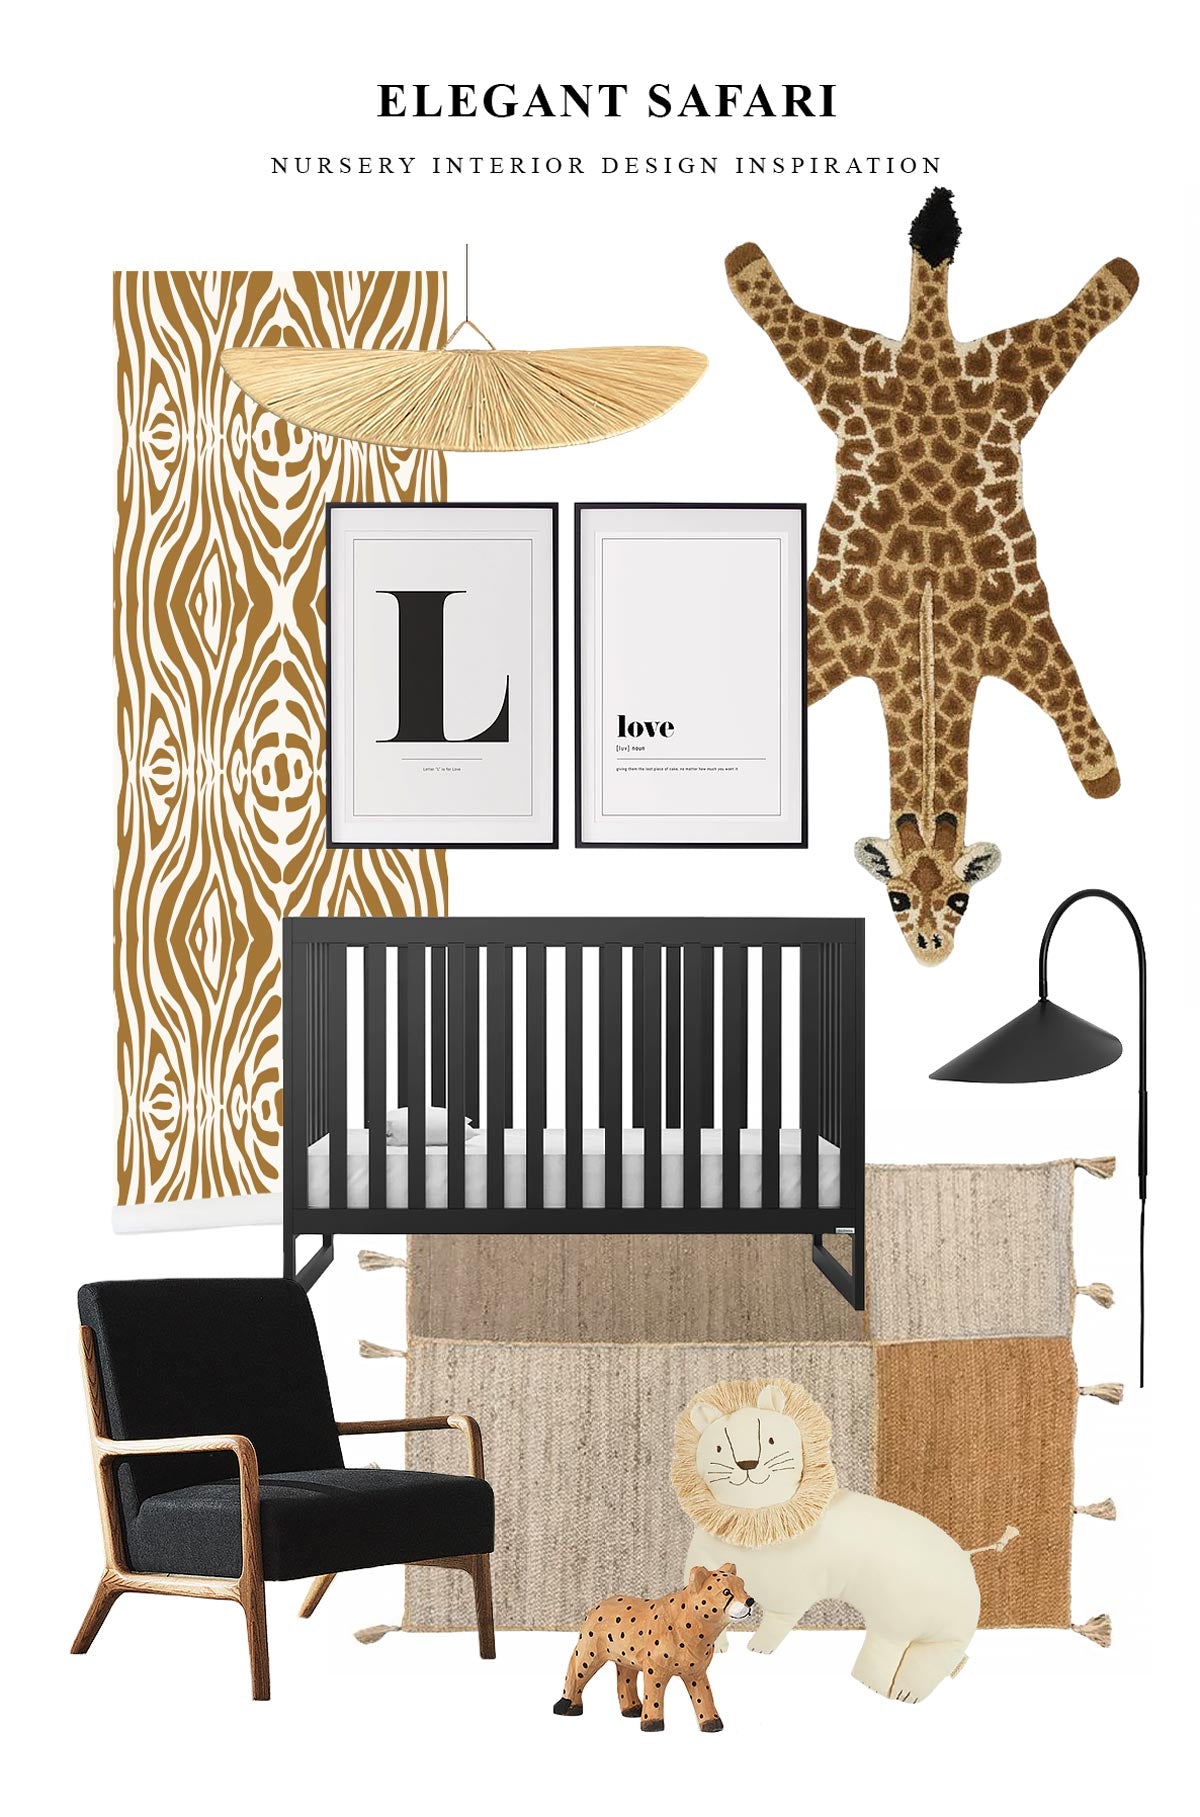 Mid-century modern safari style nursery mood board for baby room interior